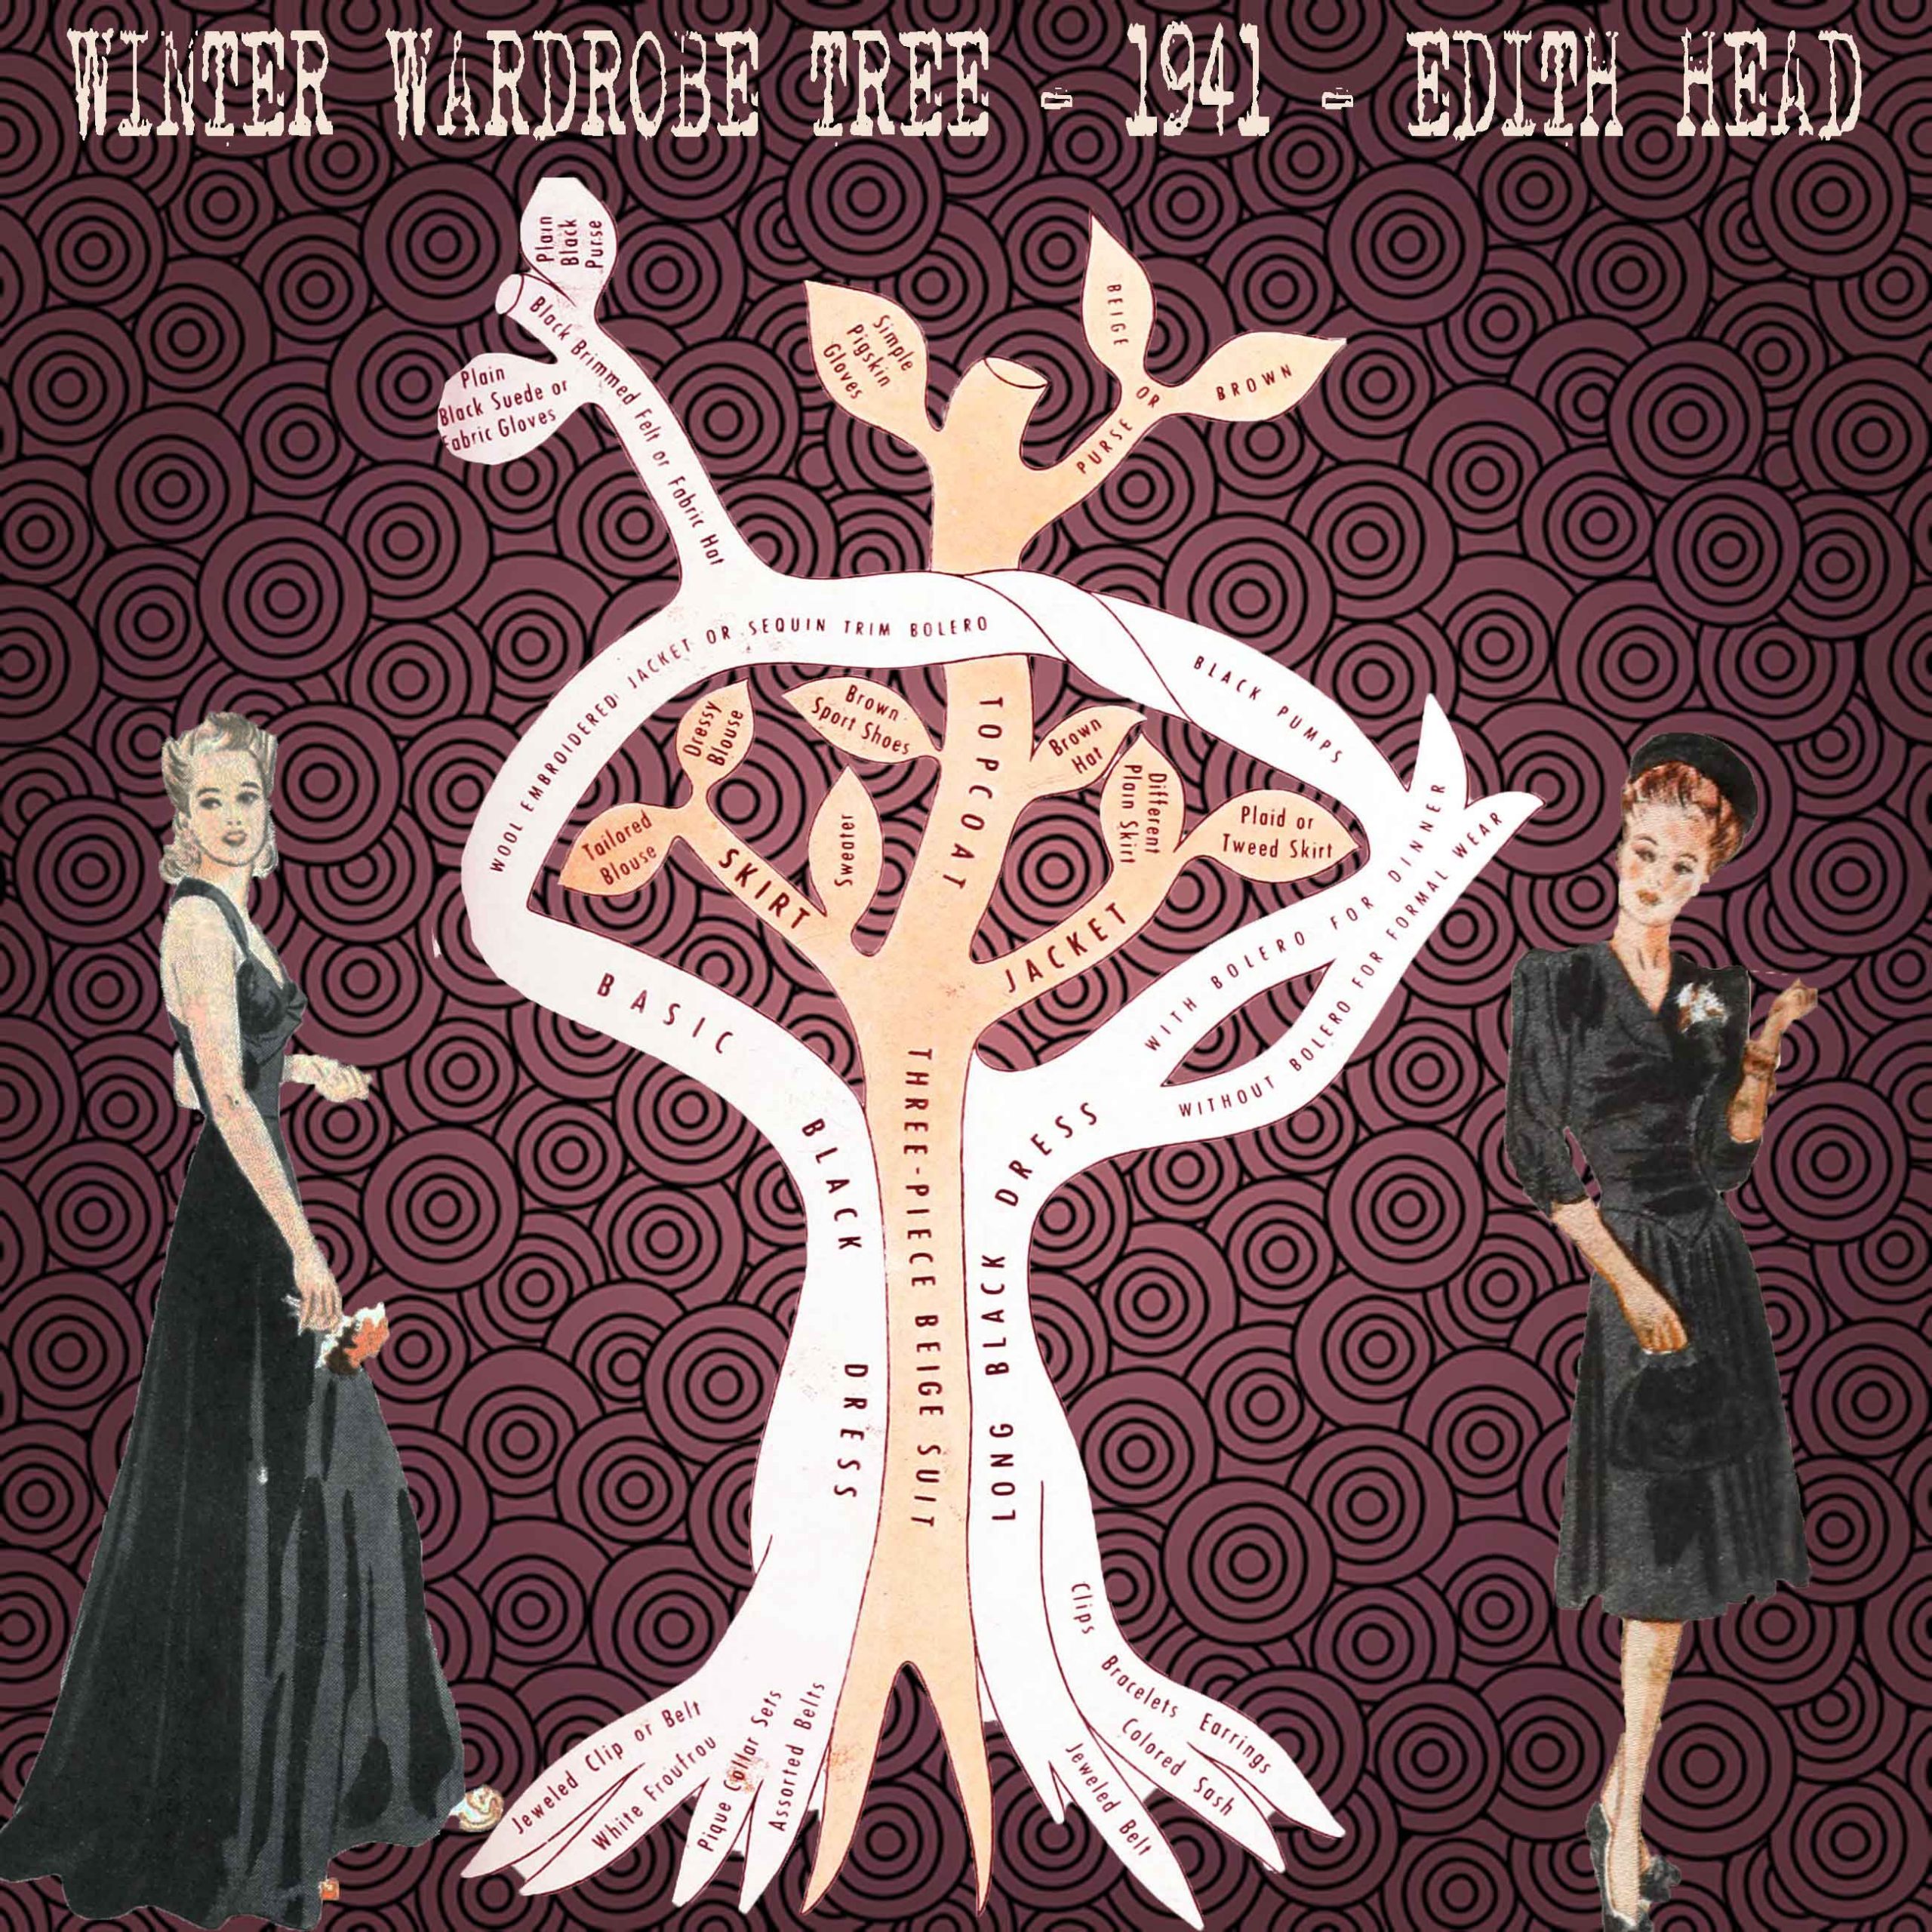 Edith-Head---1941-winter-wardrobe-tree